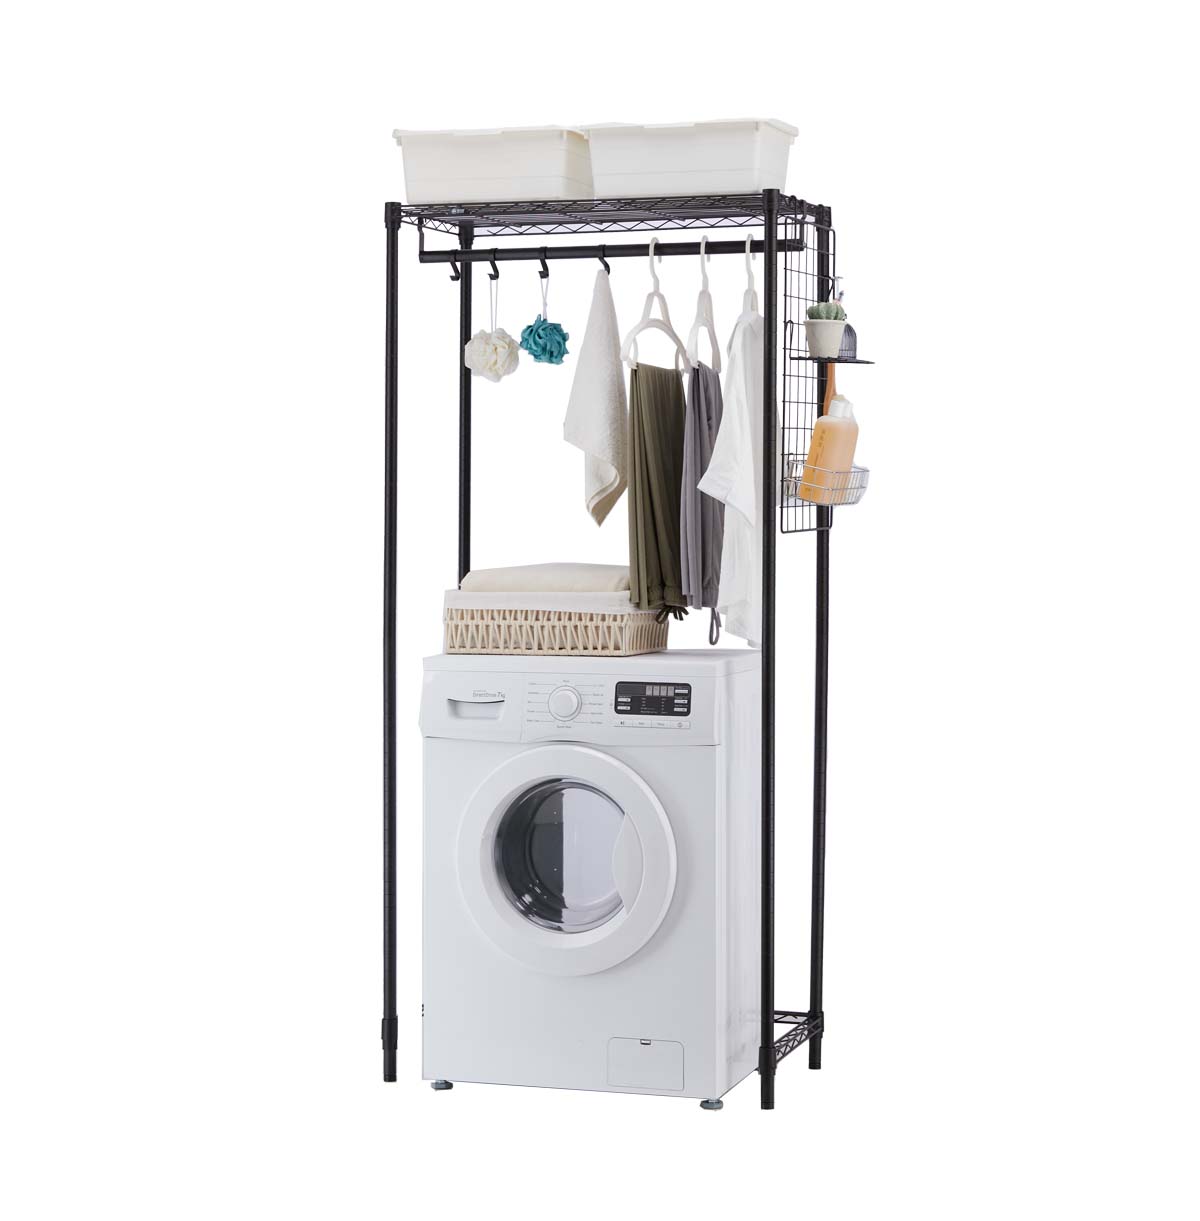 1-Tier Washing Machine Storage Rack with Hanging Rod and basket